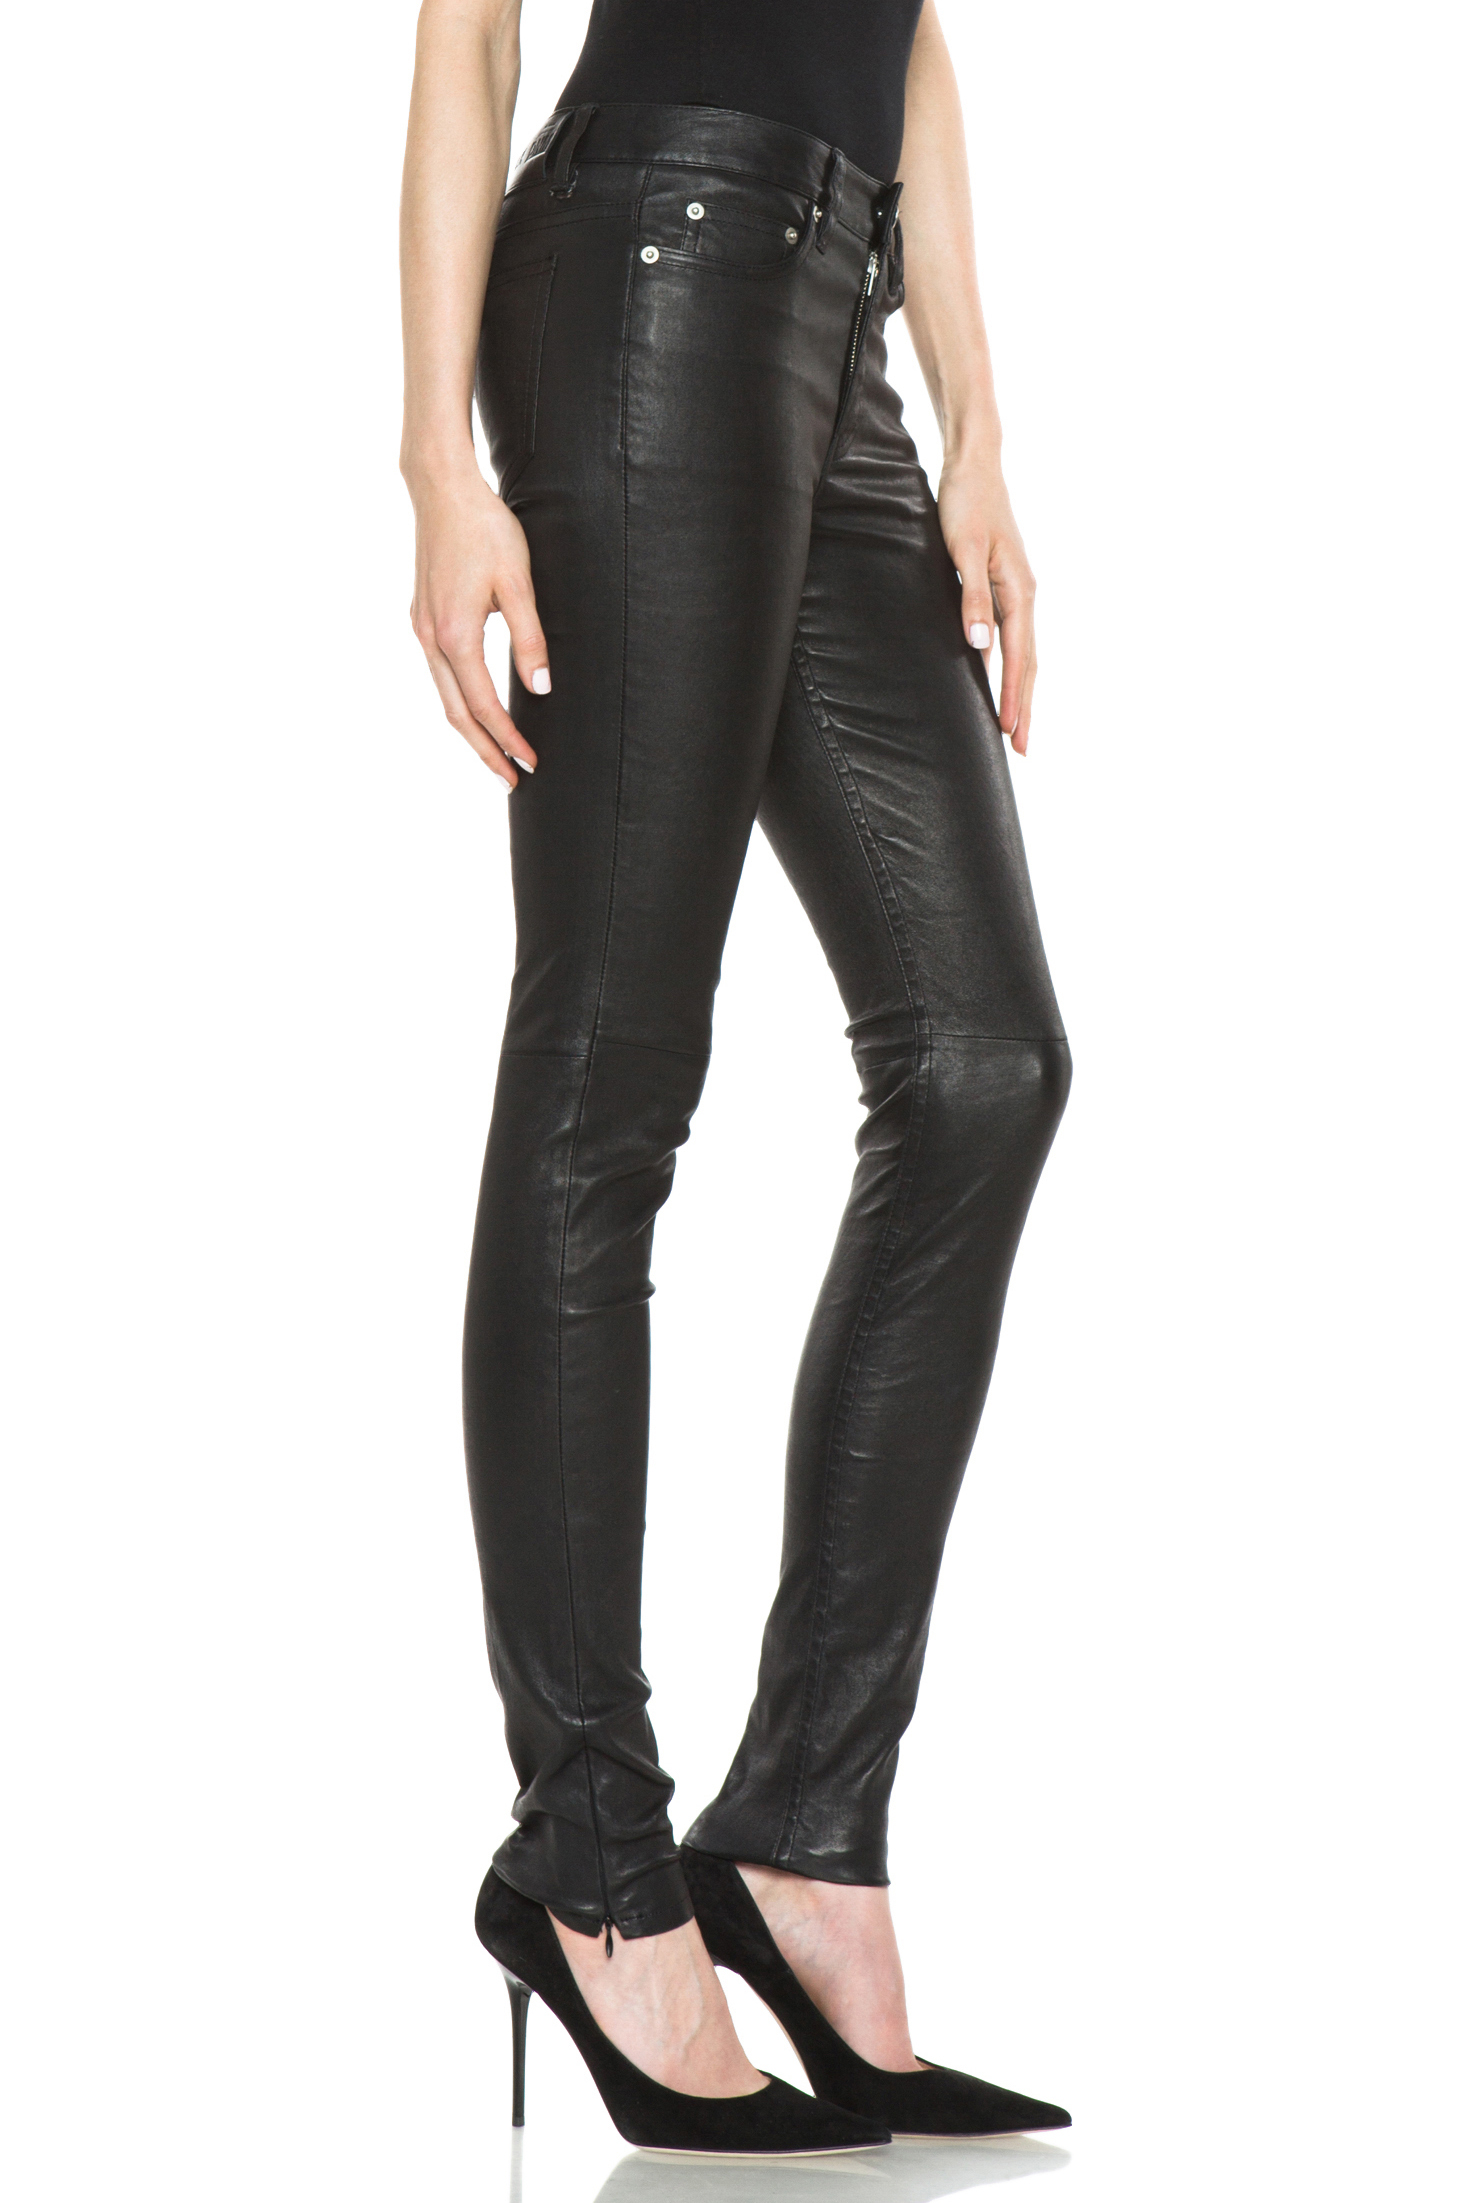 Lyst - Blk dnm 5 Pocket Skinny Leather Pant in Black